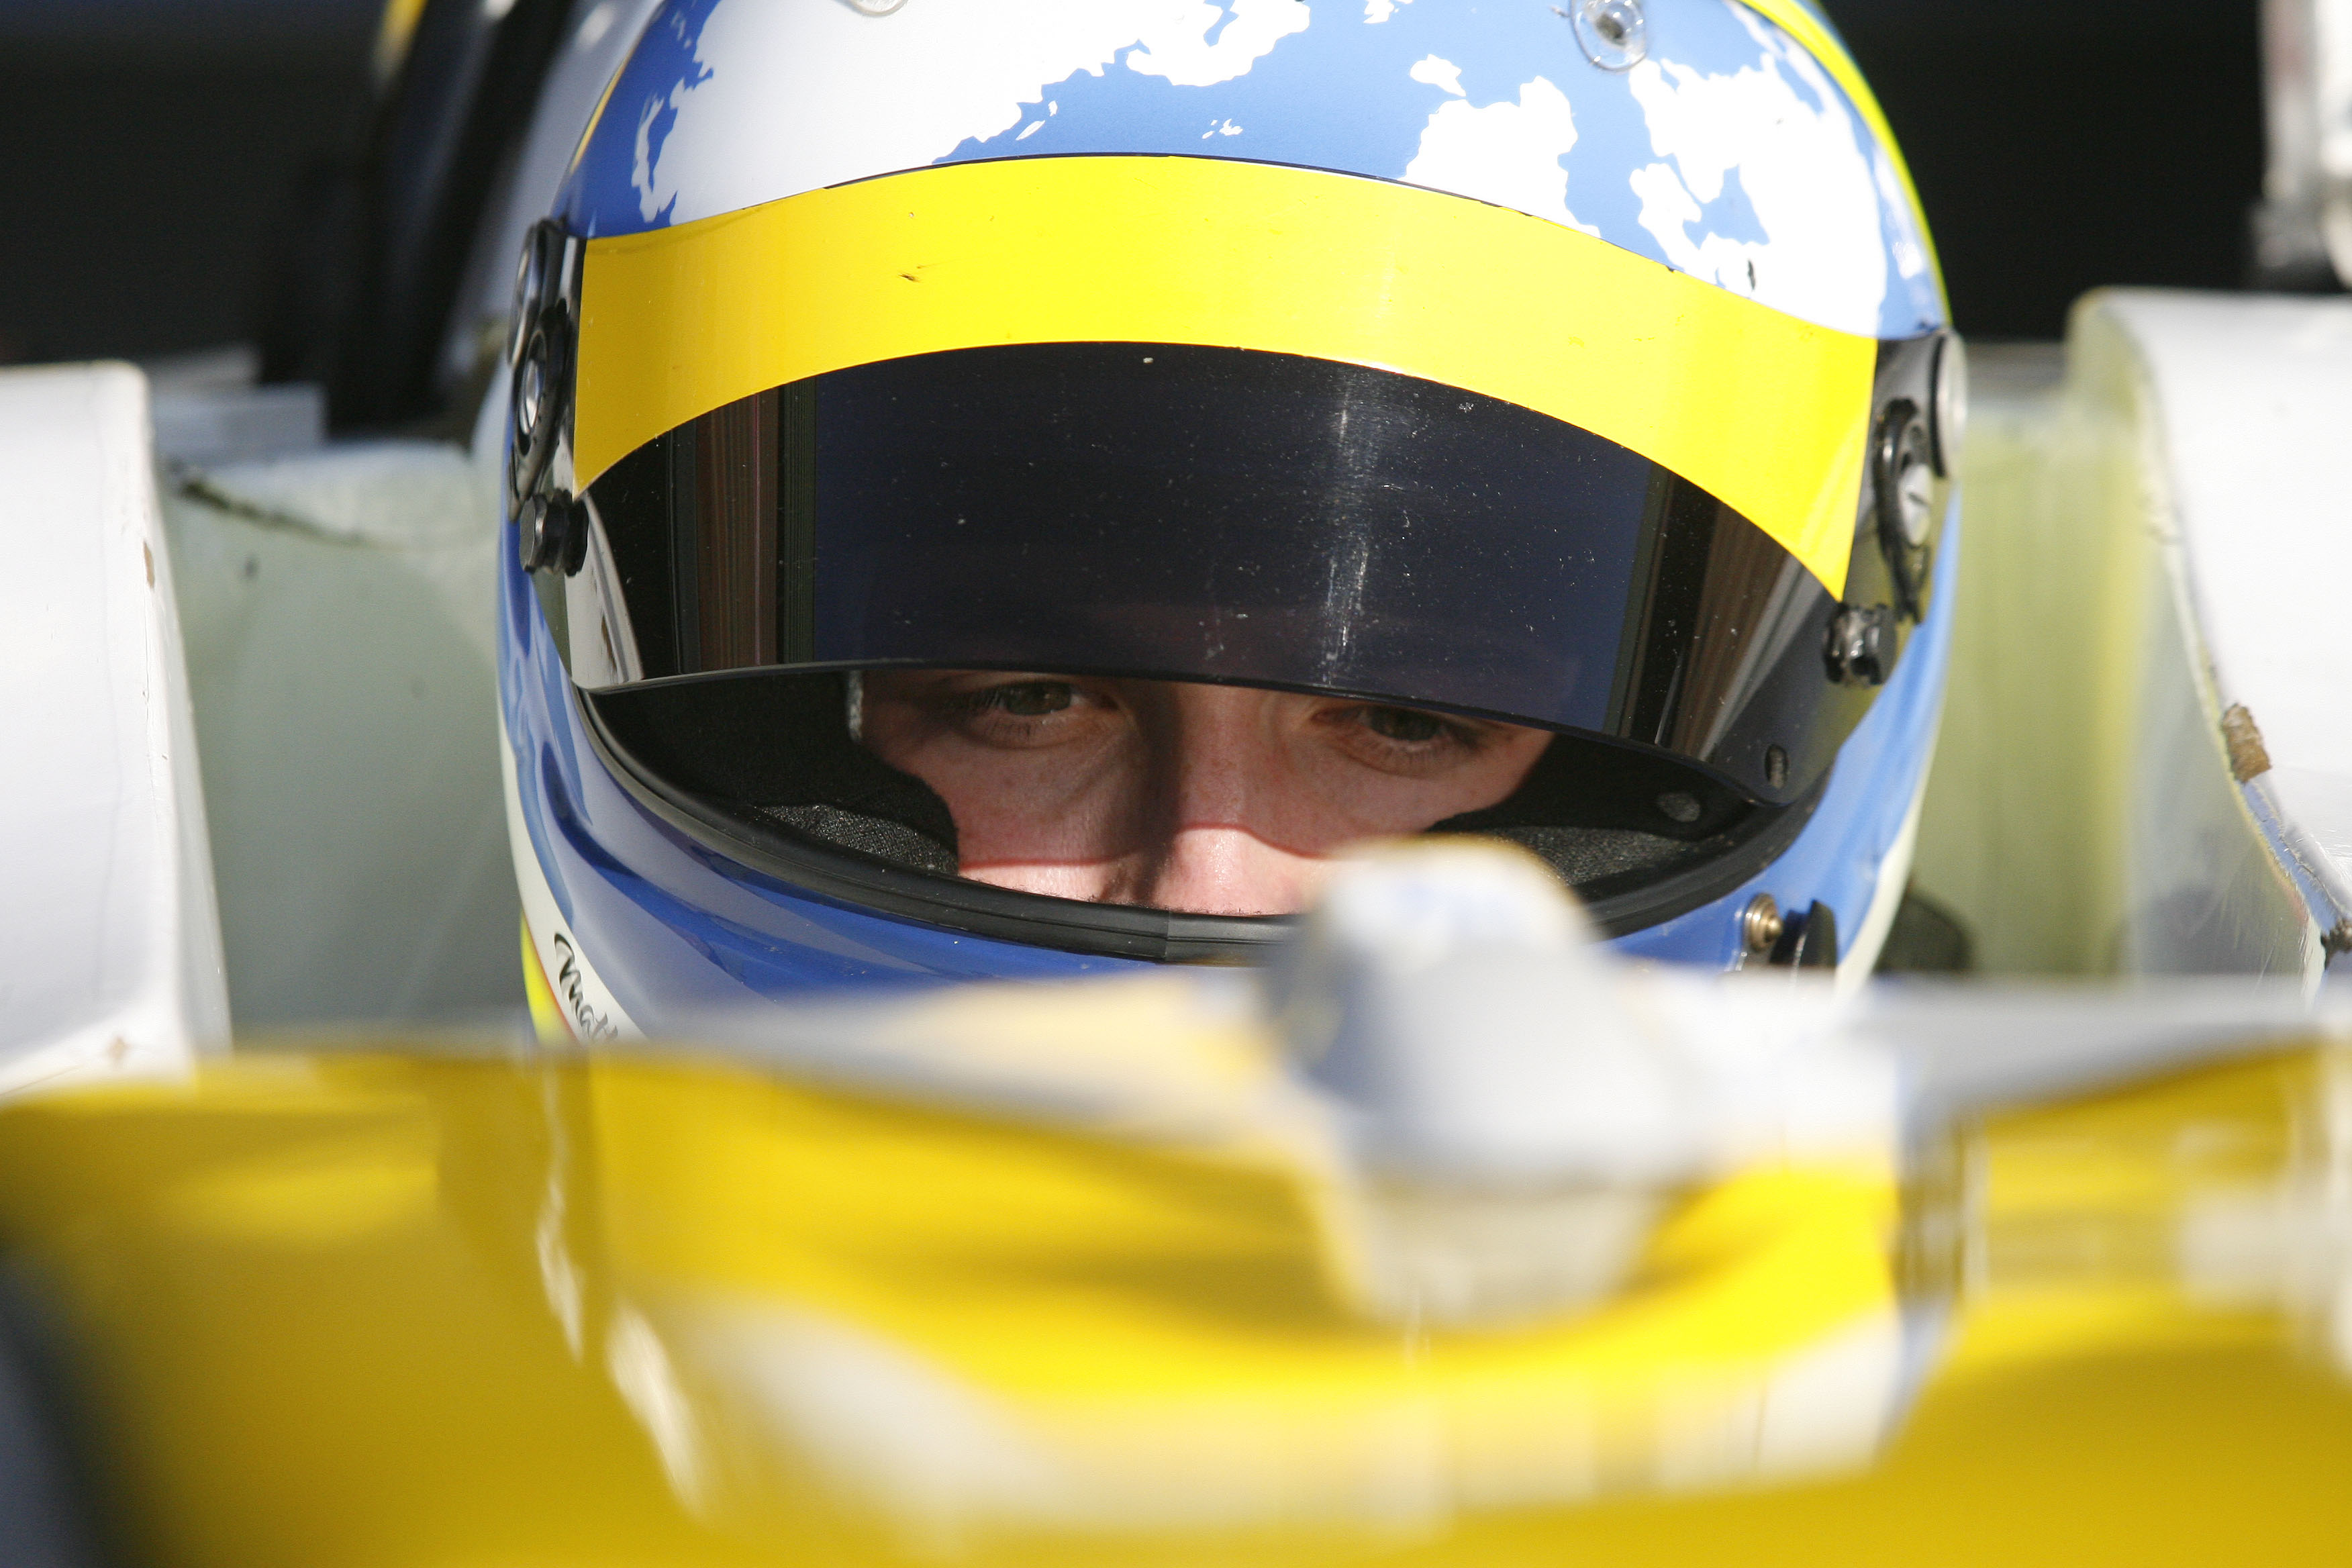 Matteo Ferrer looks through his open visor as he waits to qualify, Snetterton F4 2013